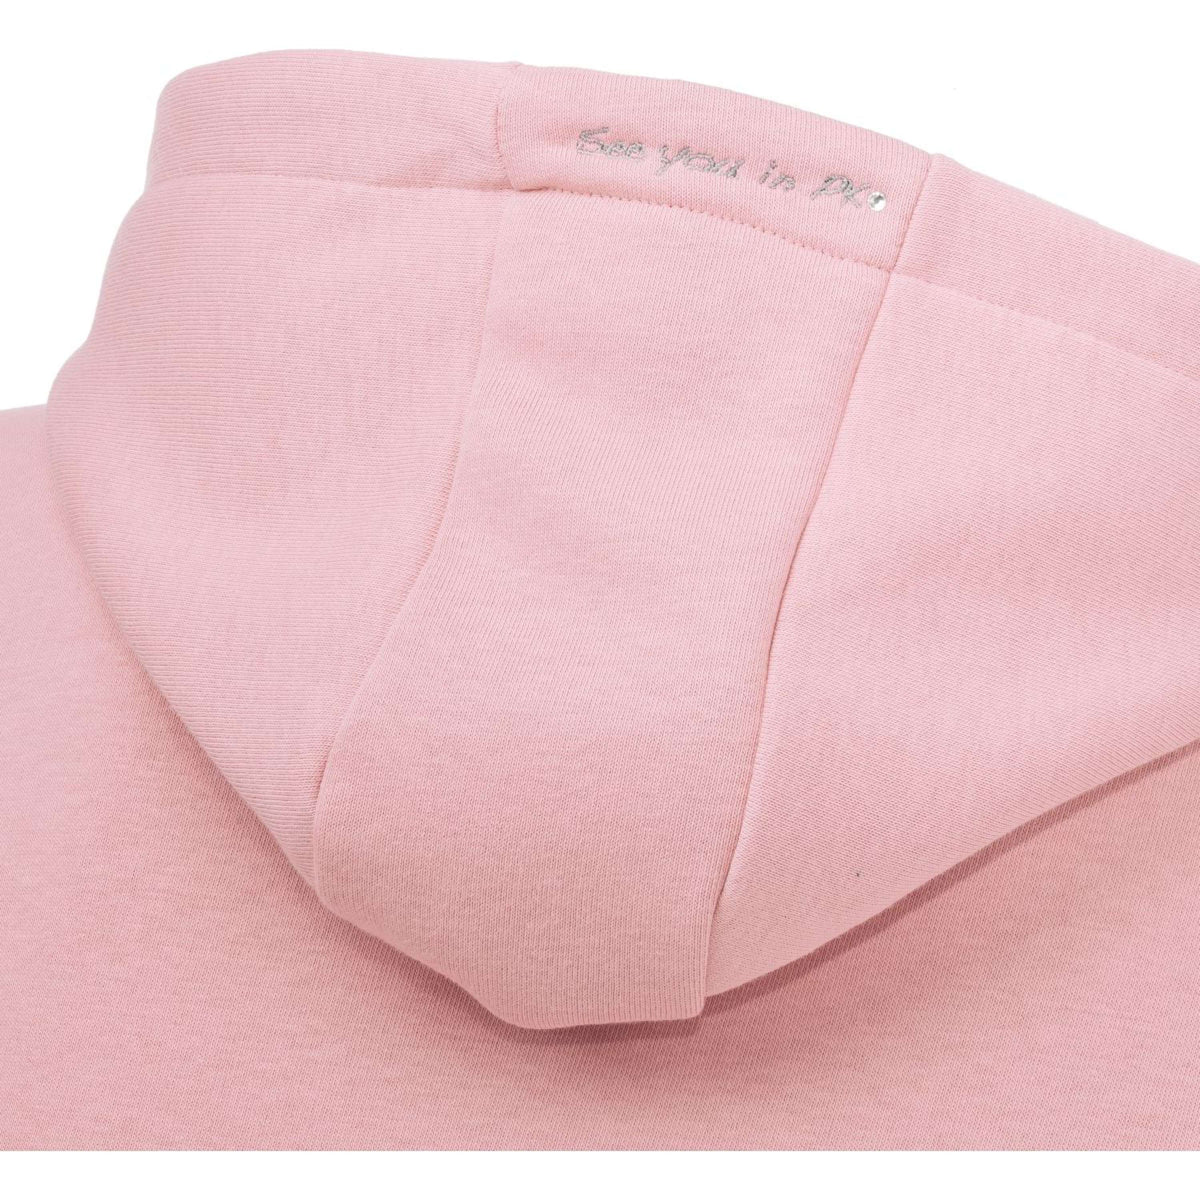 PK Sweater Laec Candy Pink